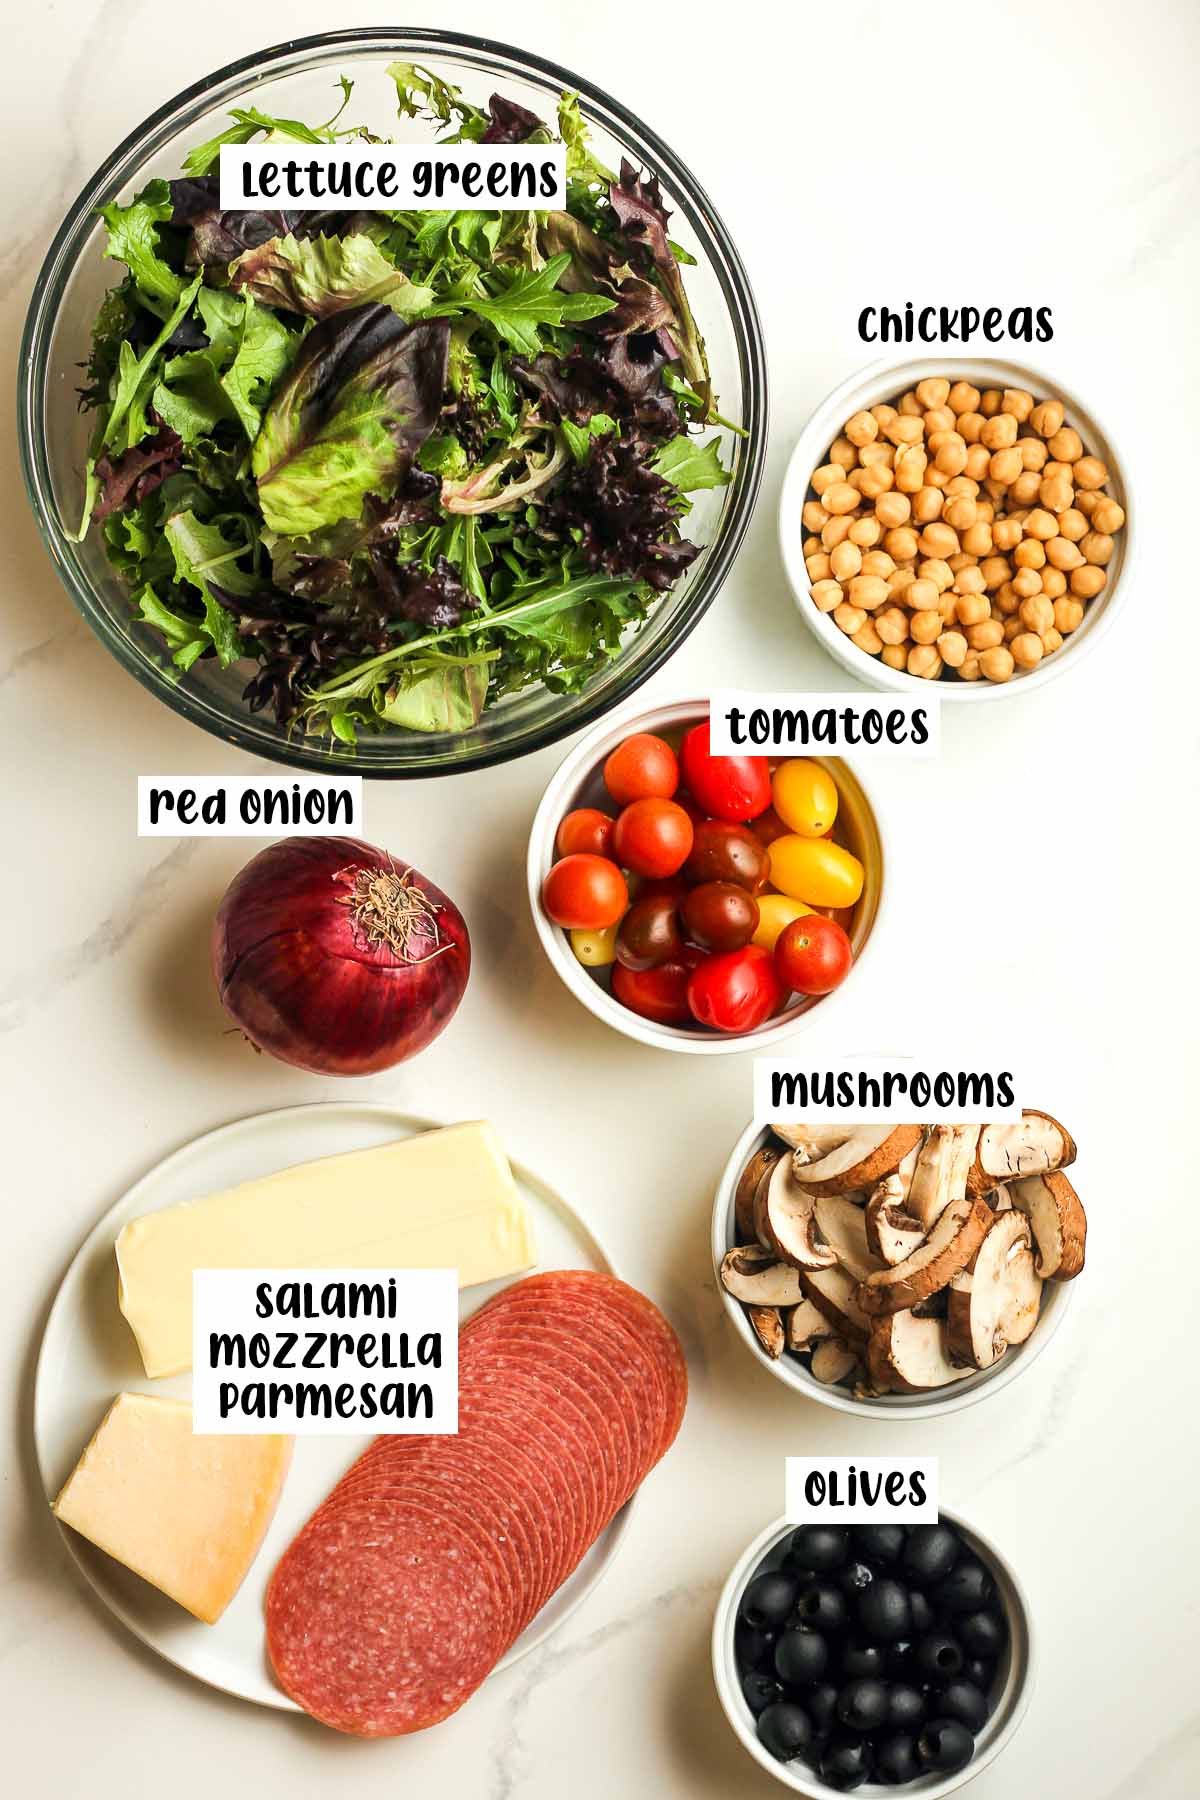 The antipasto salad ingredients, labeled.